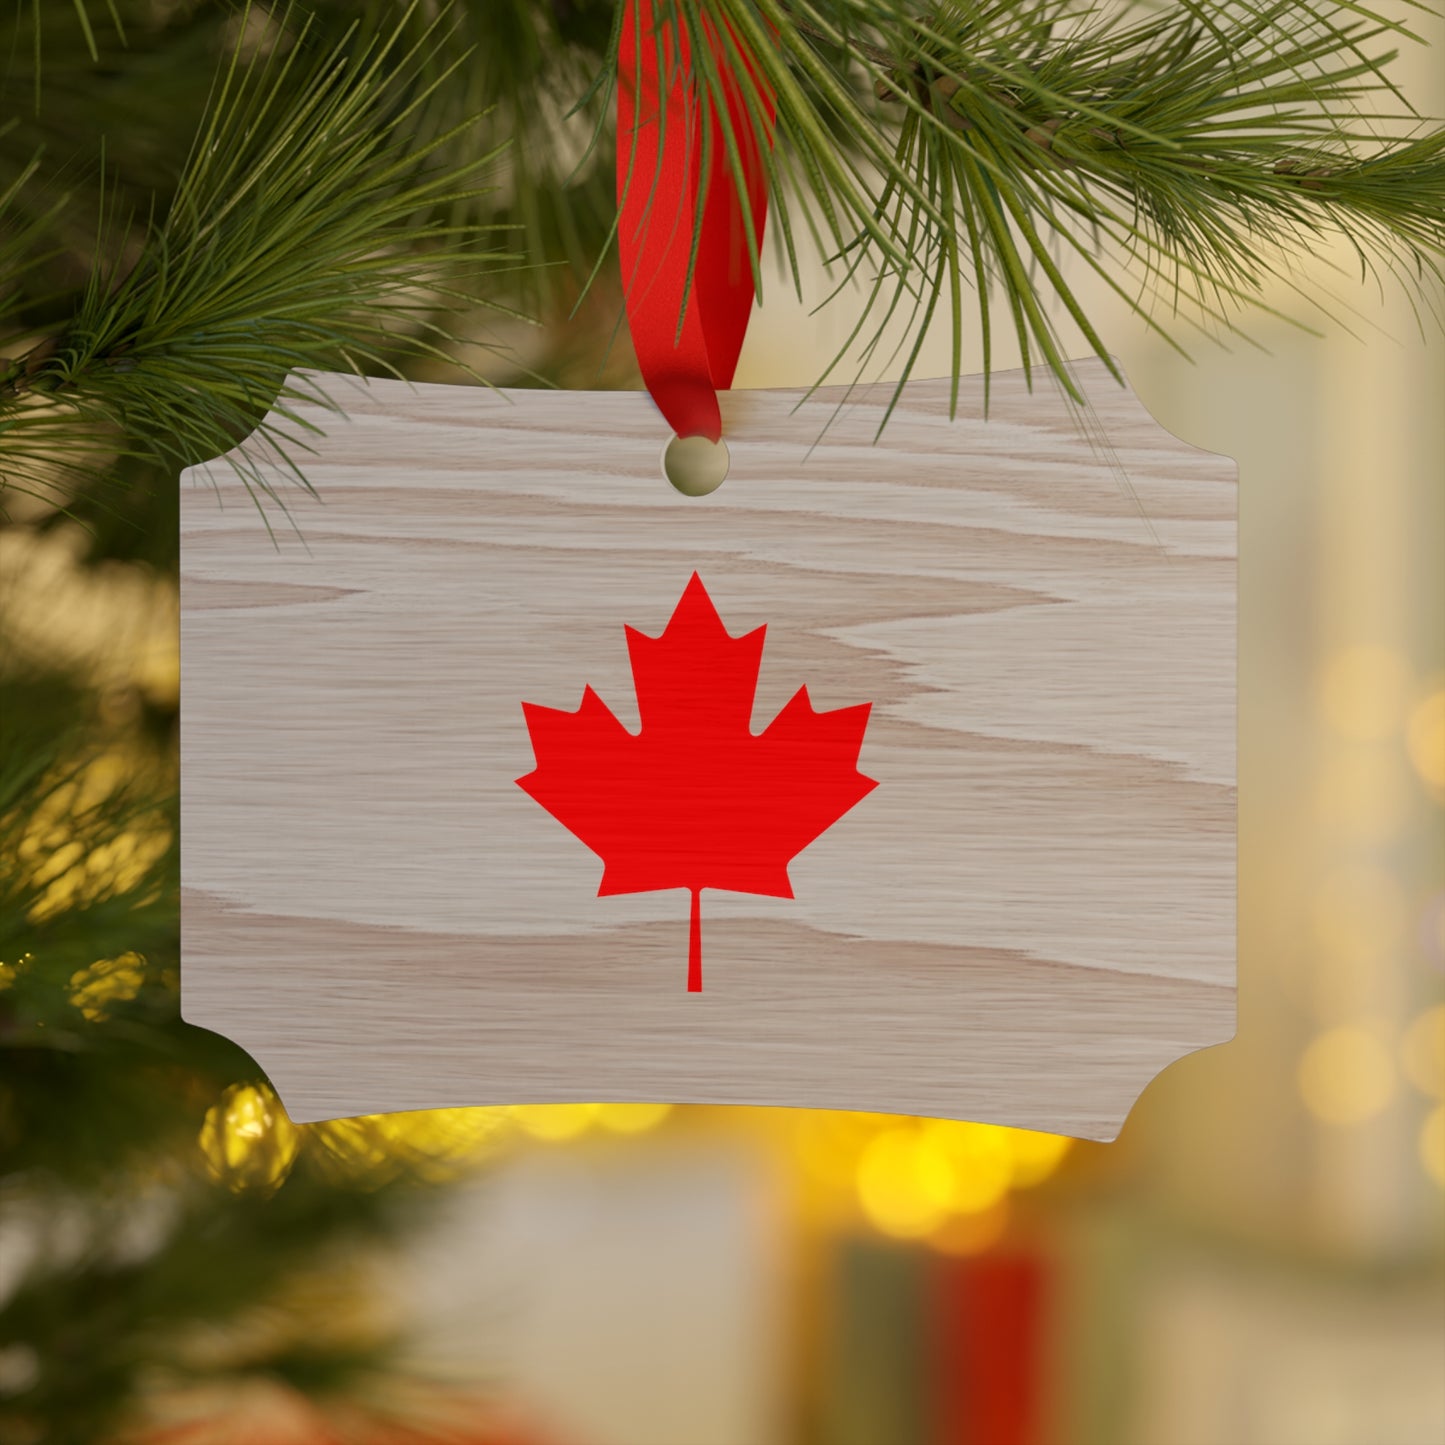 Canadian Maple Leaf Plywood Ornament